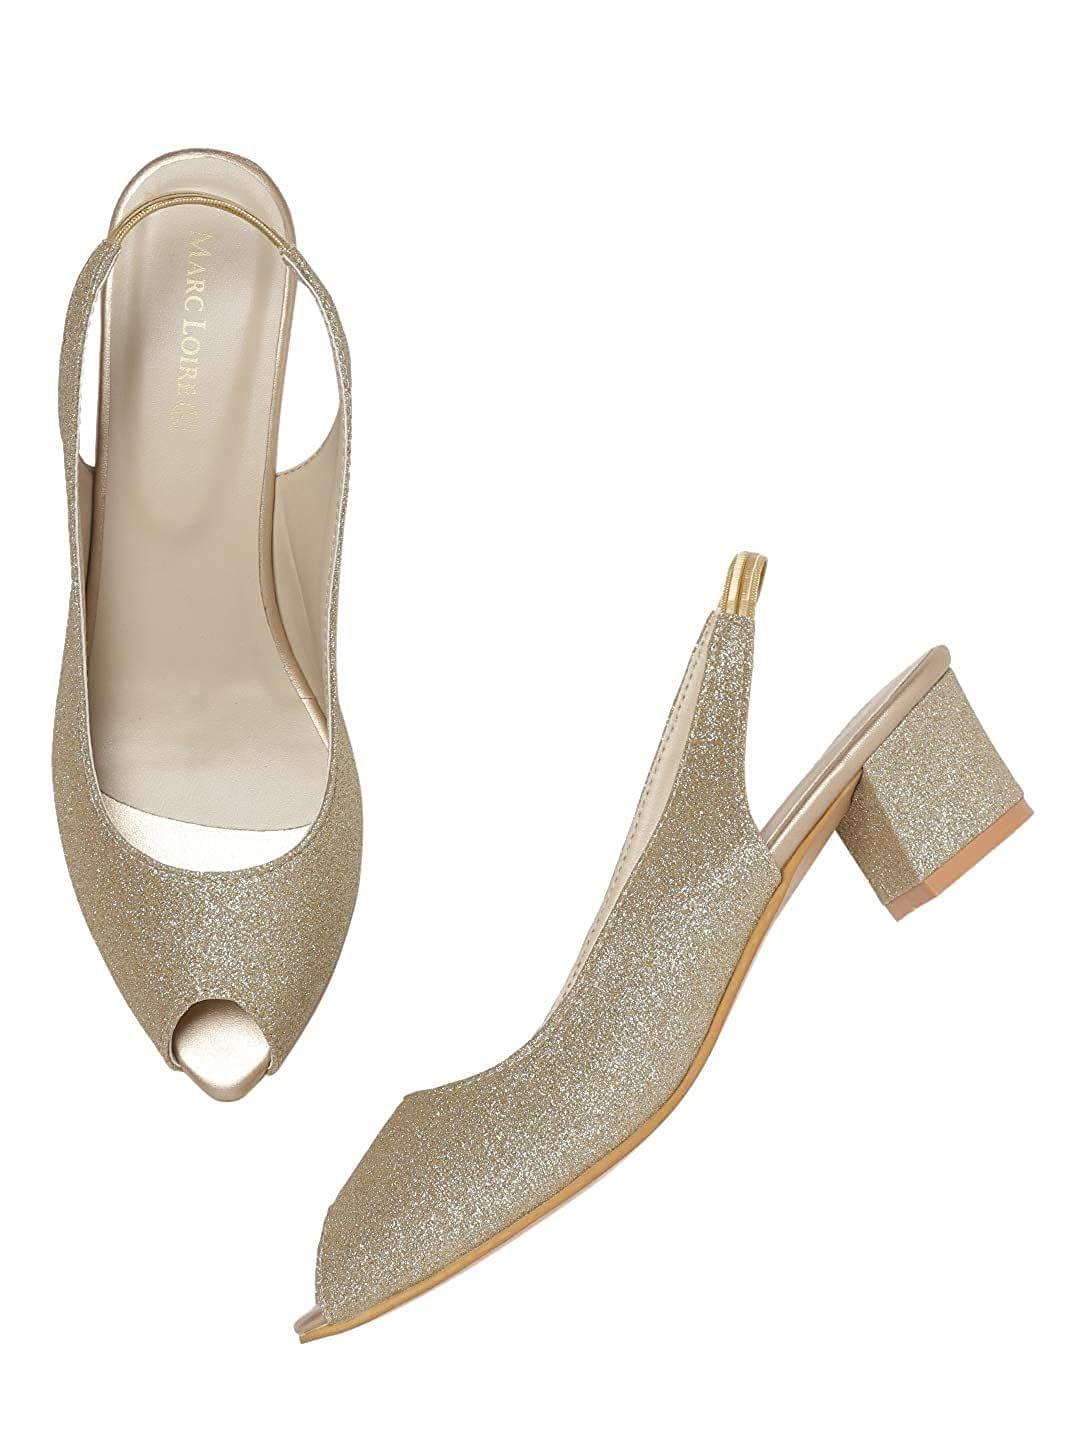 Bling Thing Rhinestone Platform Heels | Wedding shoes heels, Heels, Shoes  heels classy